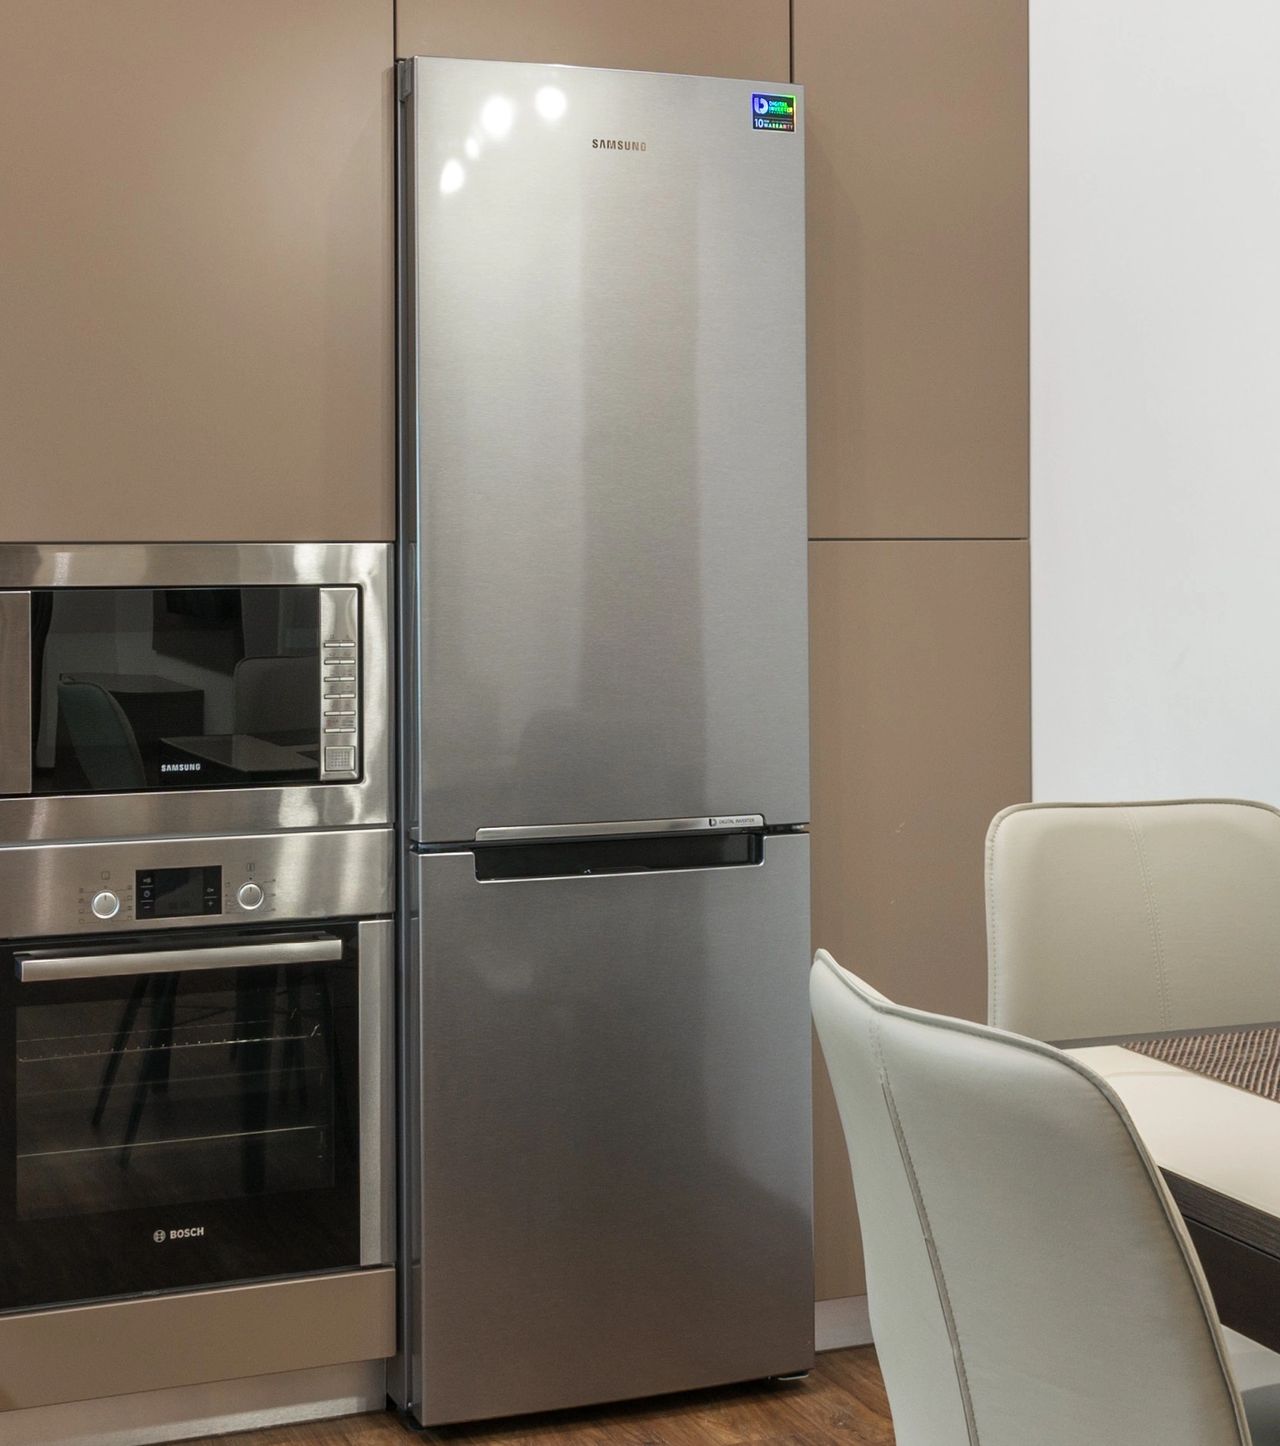 A Mid range Samsung Refrigerator (Bottom Freezer)